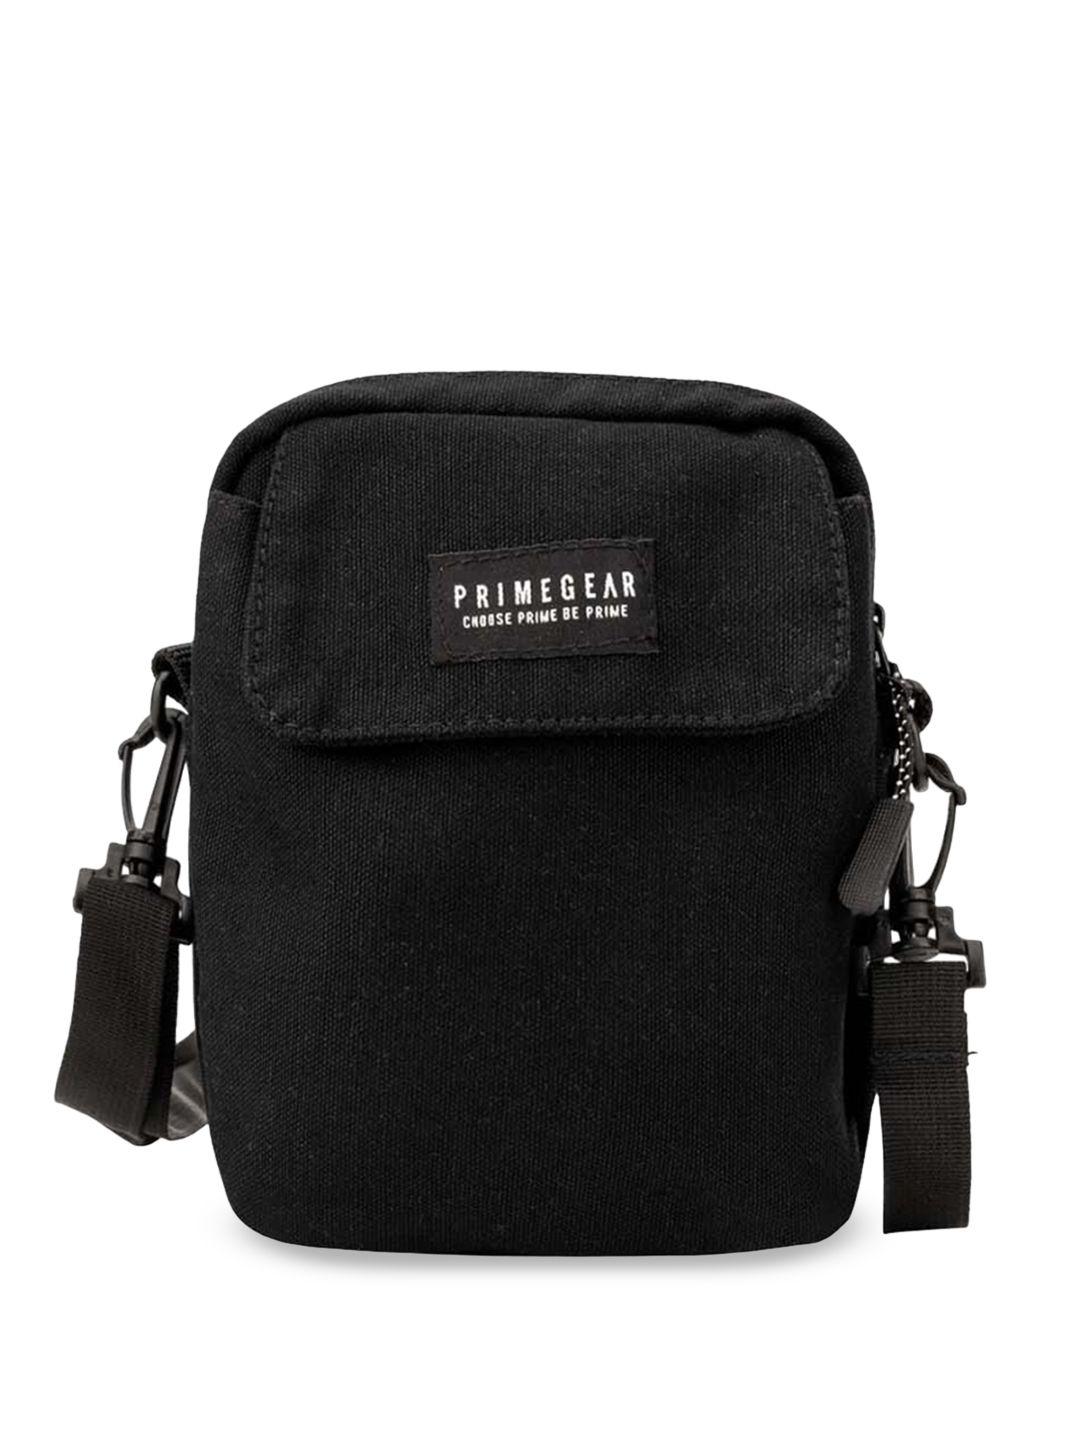 primegear textured oversized shopper handheld bag